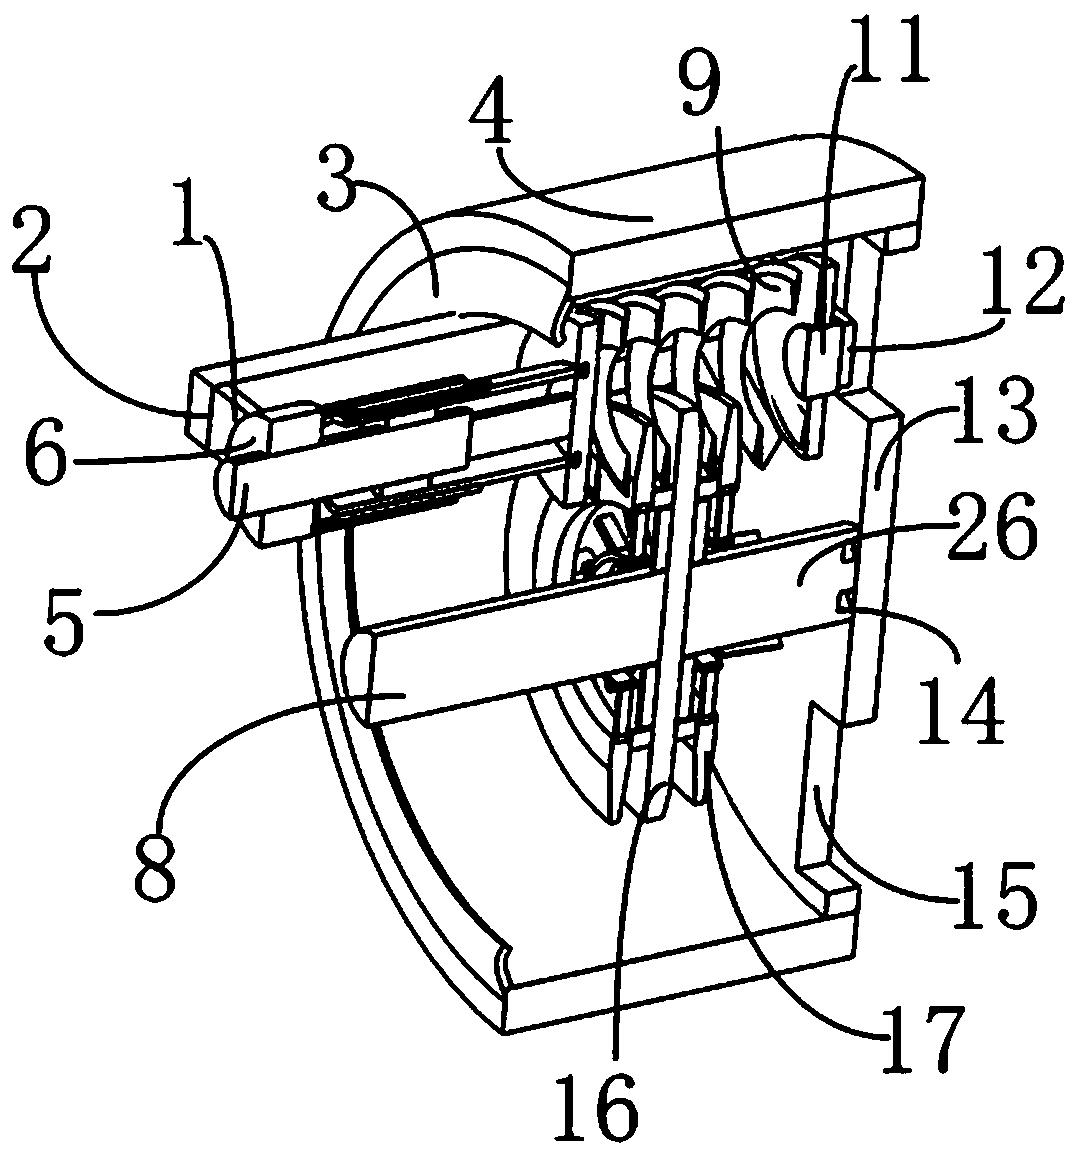 Adjustable braking mechanism based on spiral piece